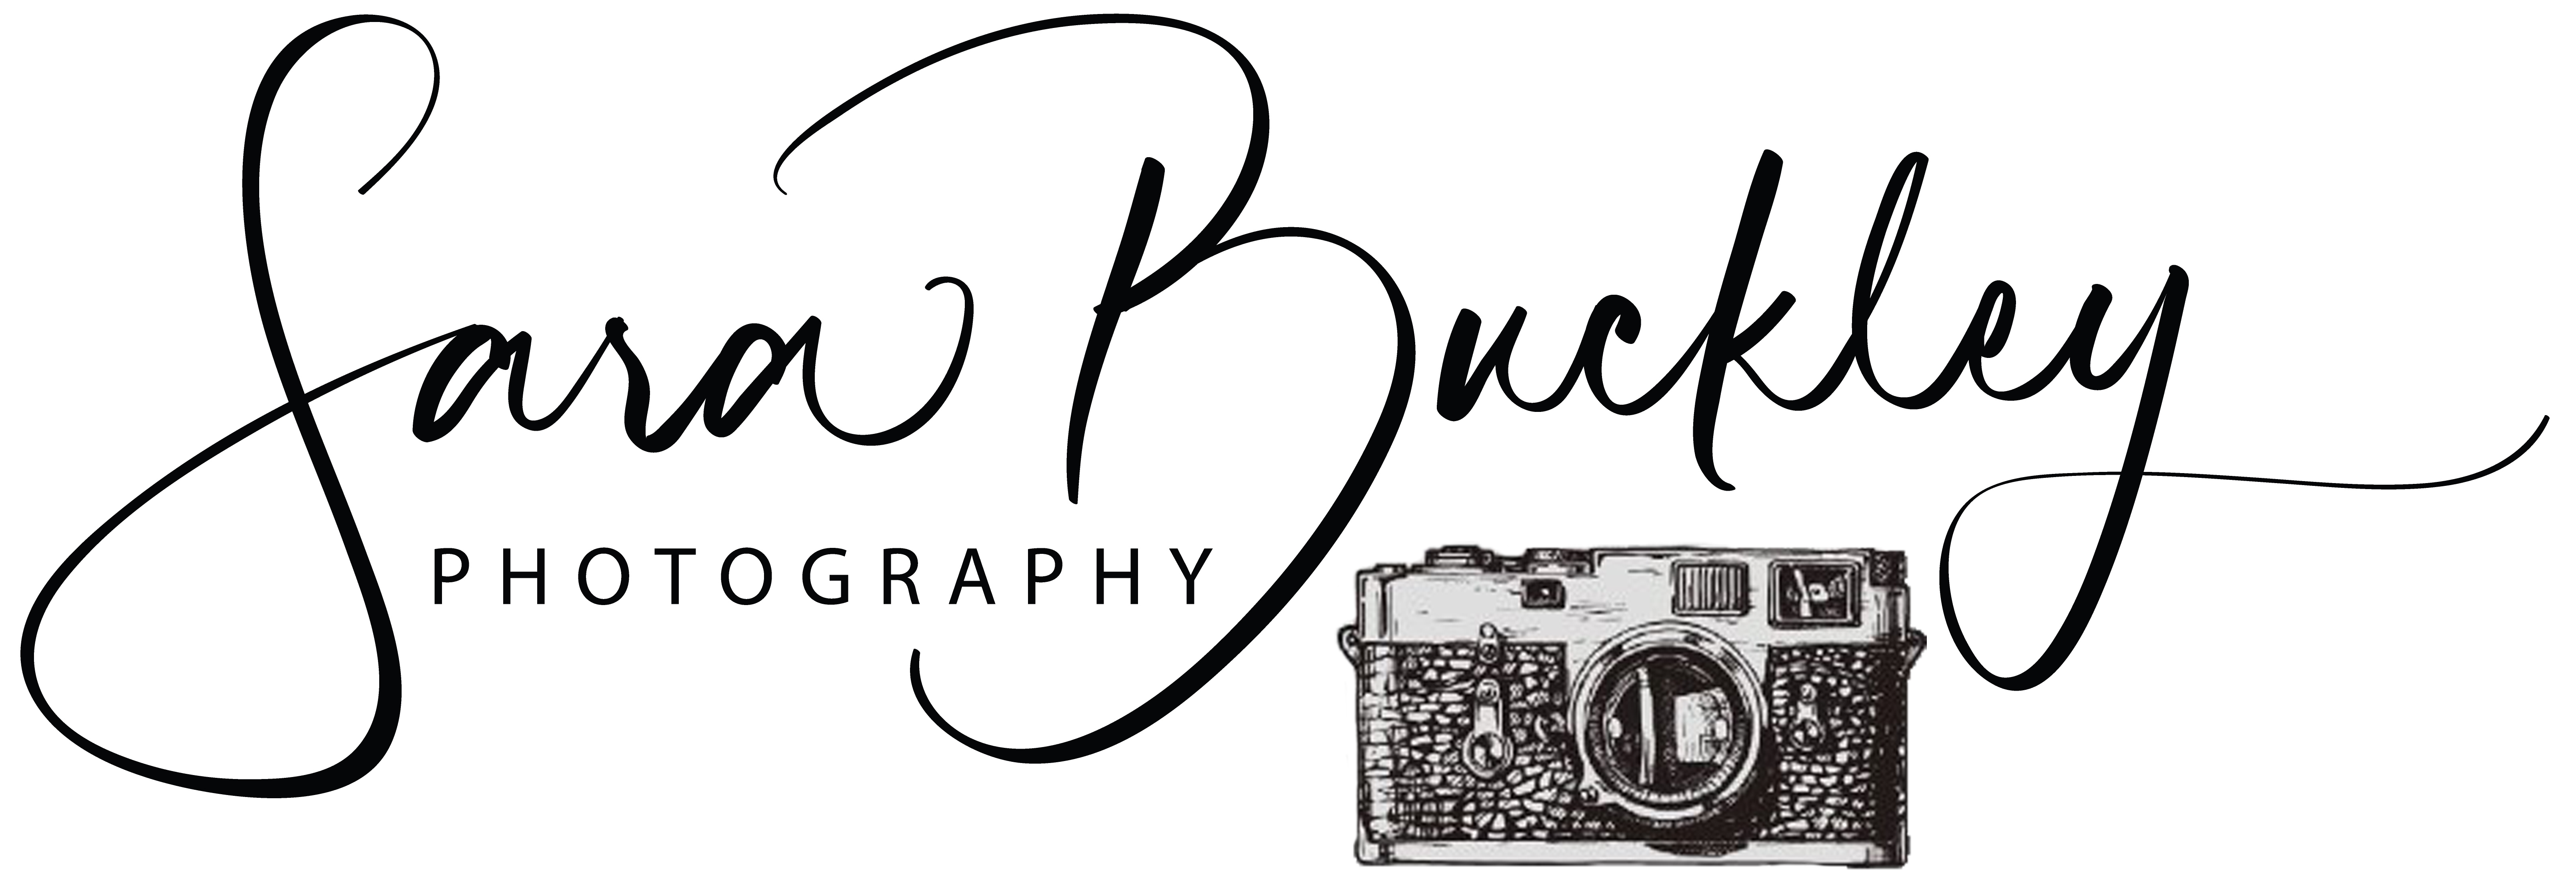 Sara Buckley Photography